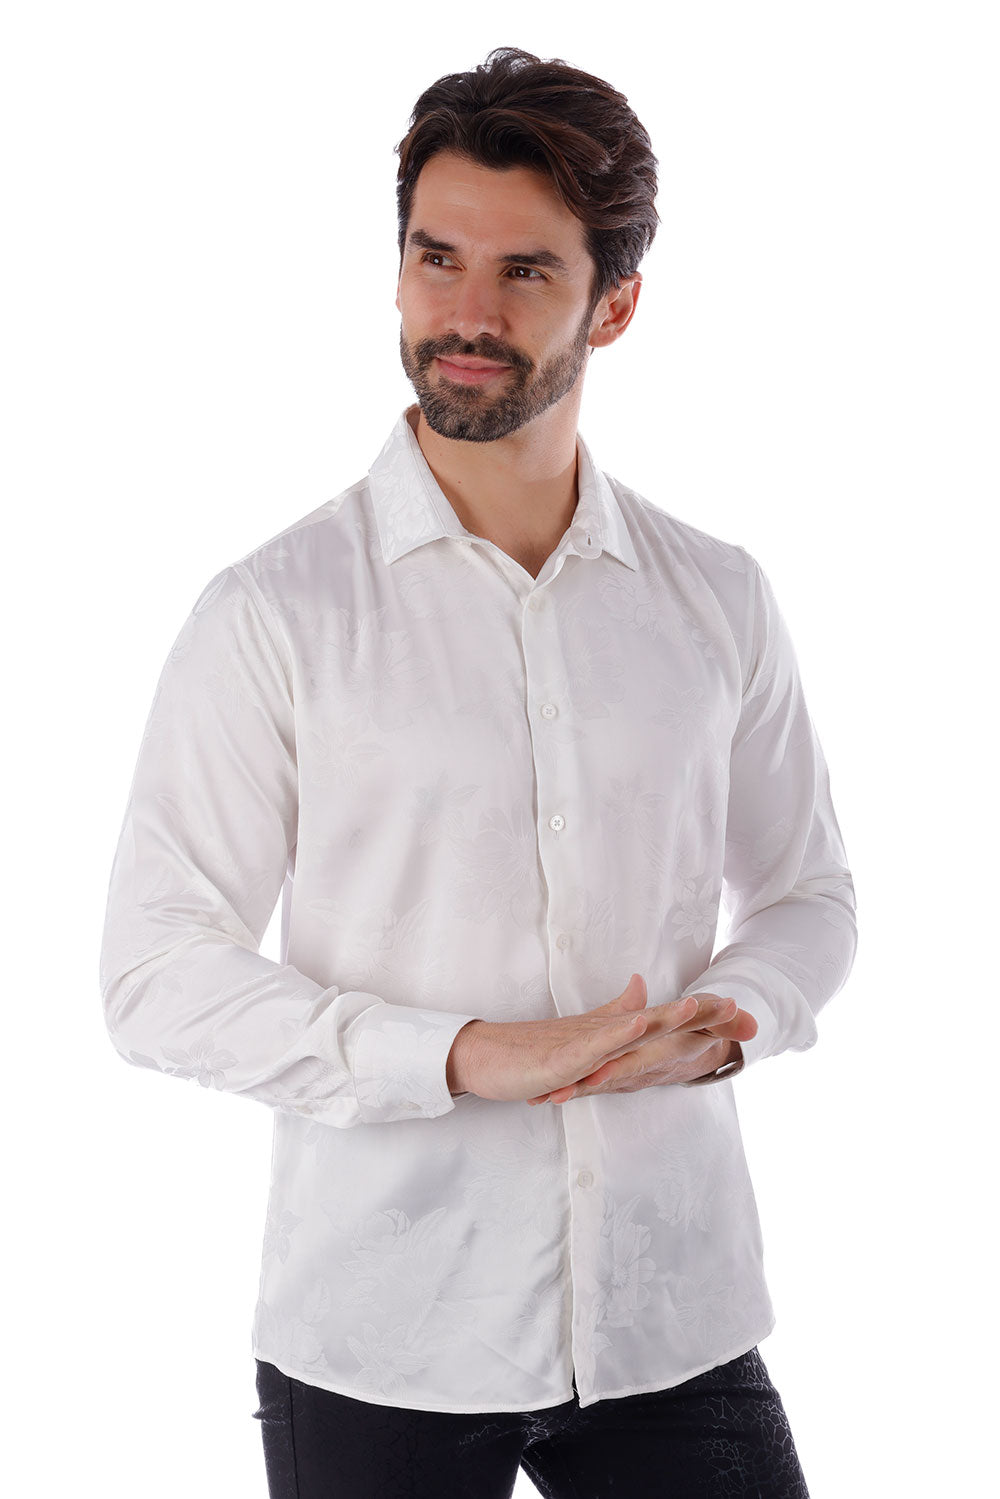 BARABAS Men's Floral Stretch Button Down Long Sleeve Shirt 4B36 White